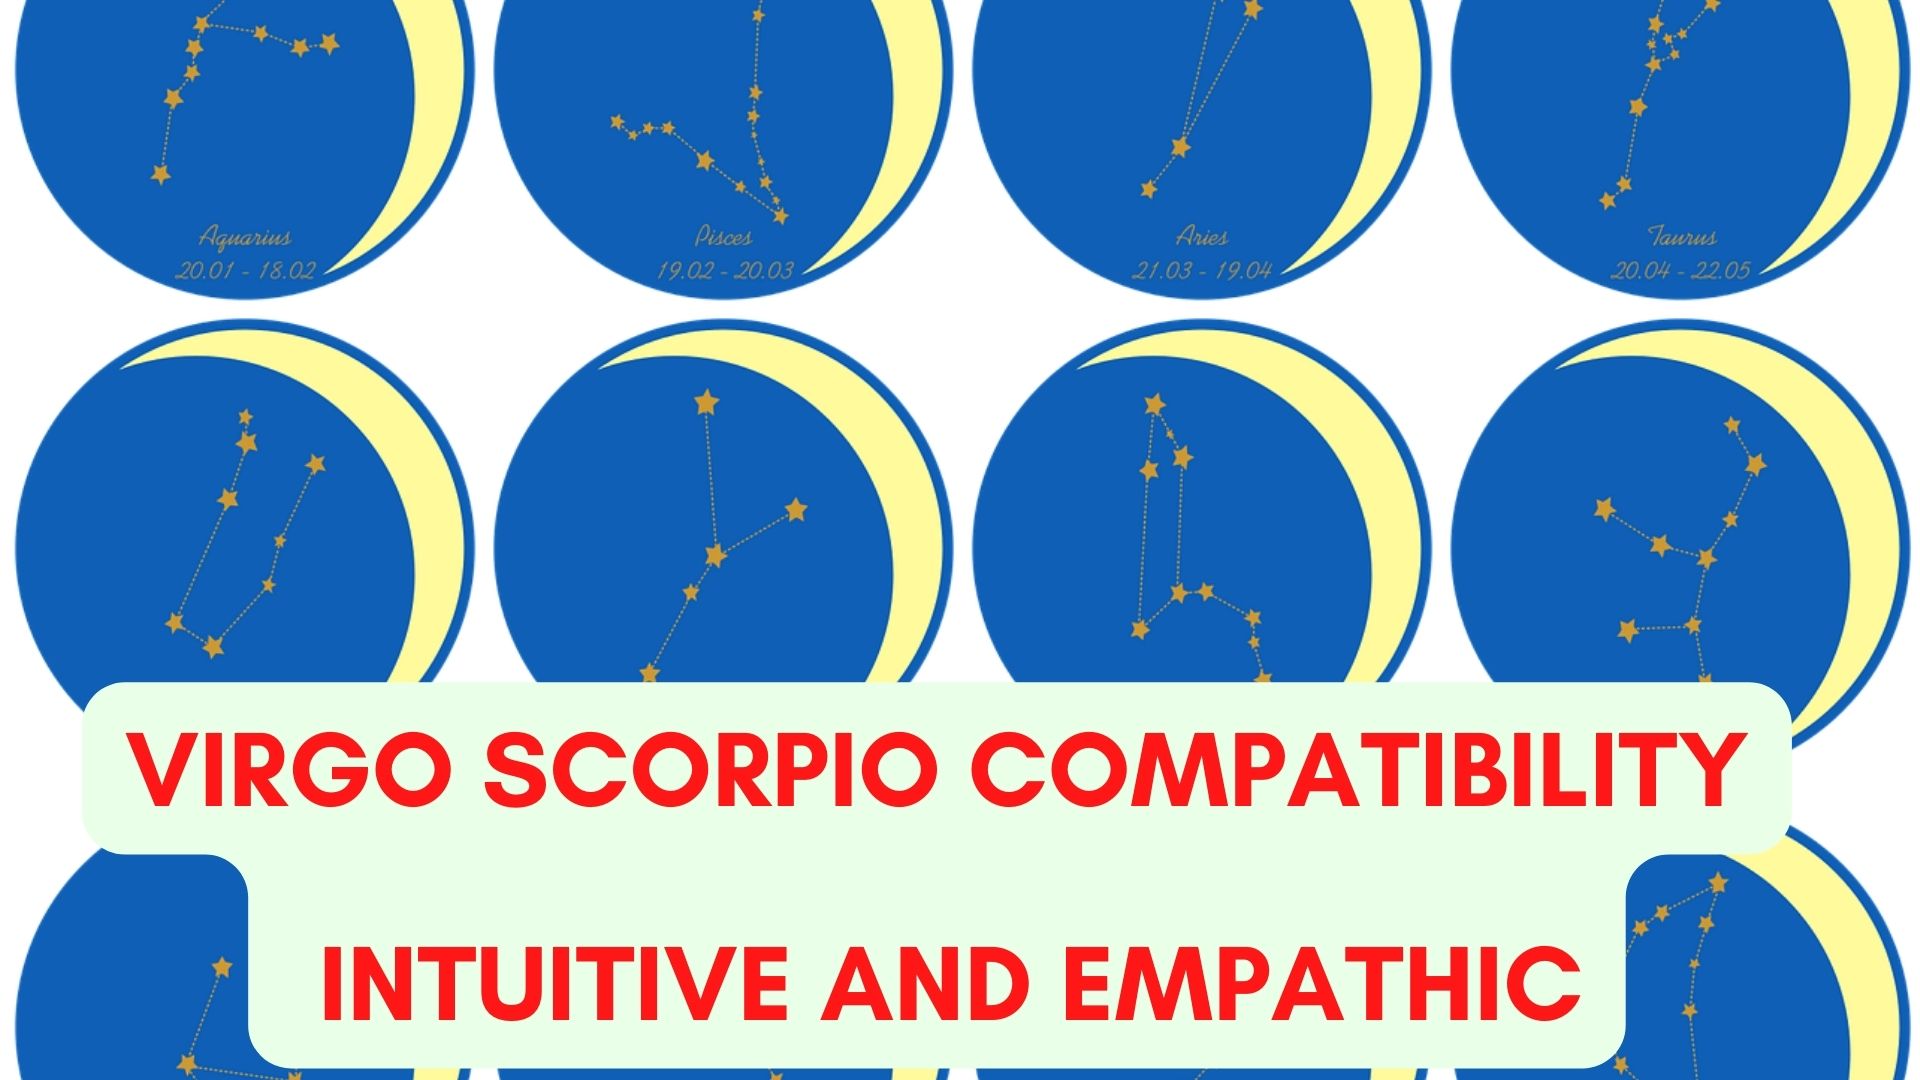 Virgo Scorpio Compatibility - Intuitive And Empathic